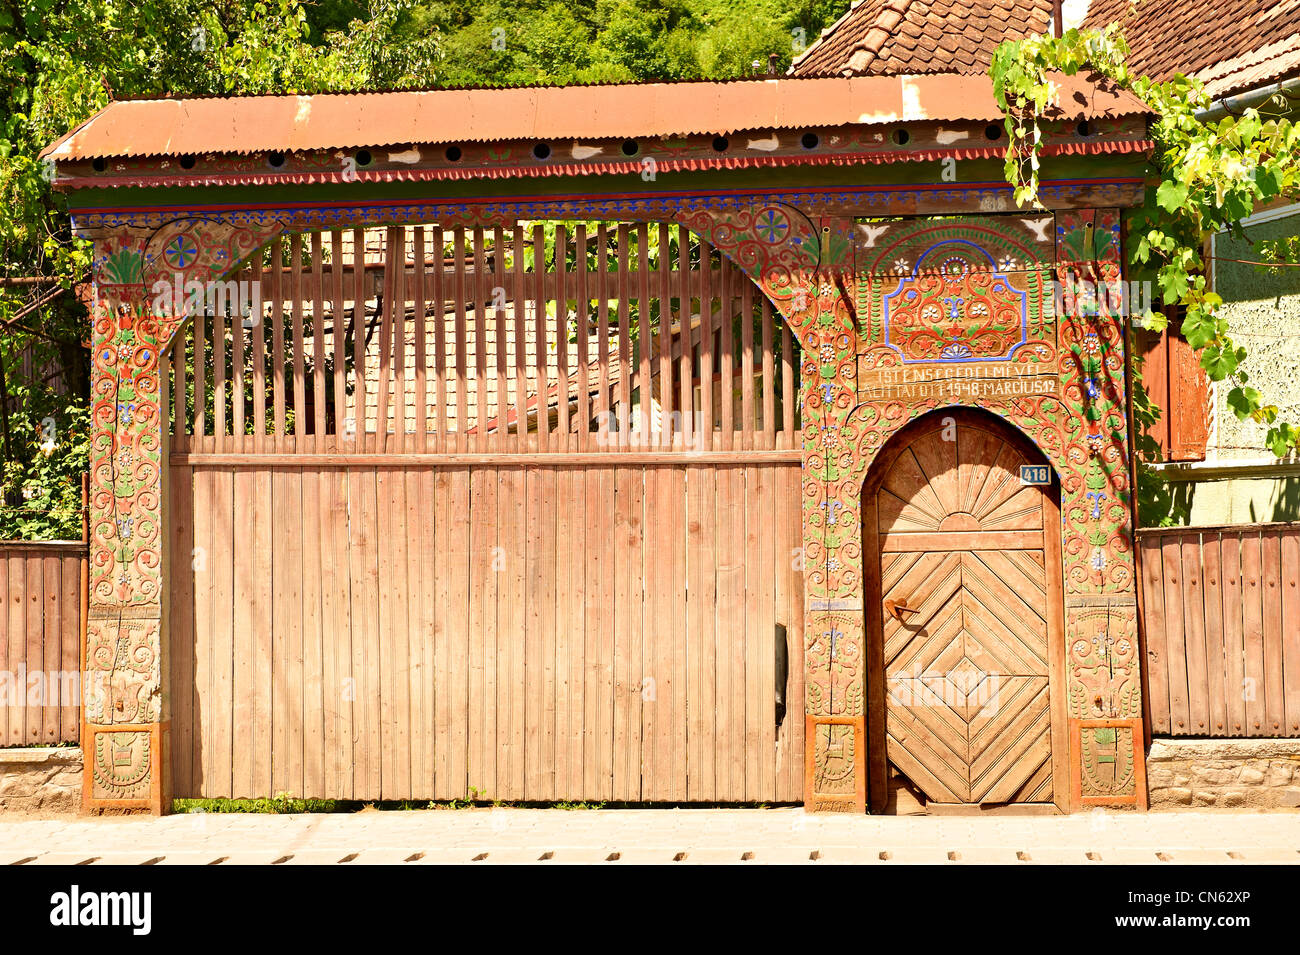 Traditional wooden Székely ( Szekely ) gates in a Szekely village near Cluj, Eastern Transylvania. Stock Photo